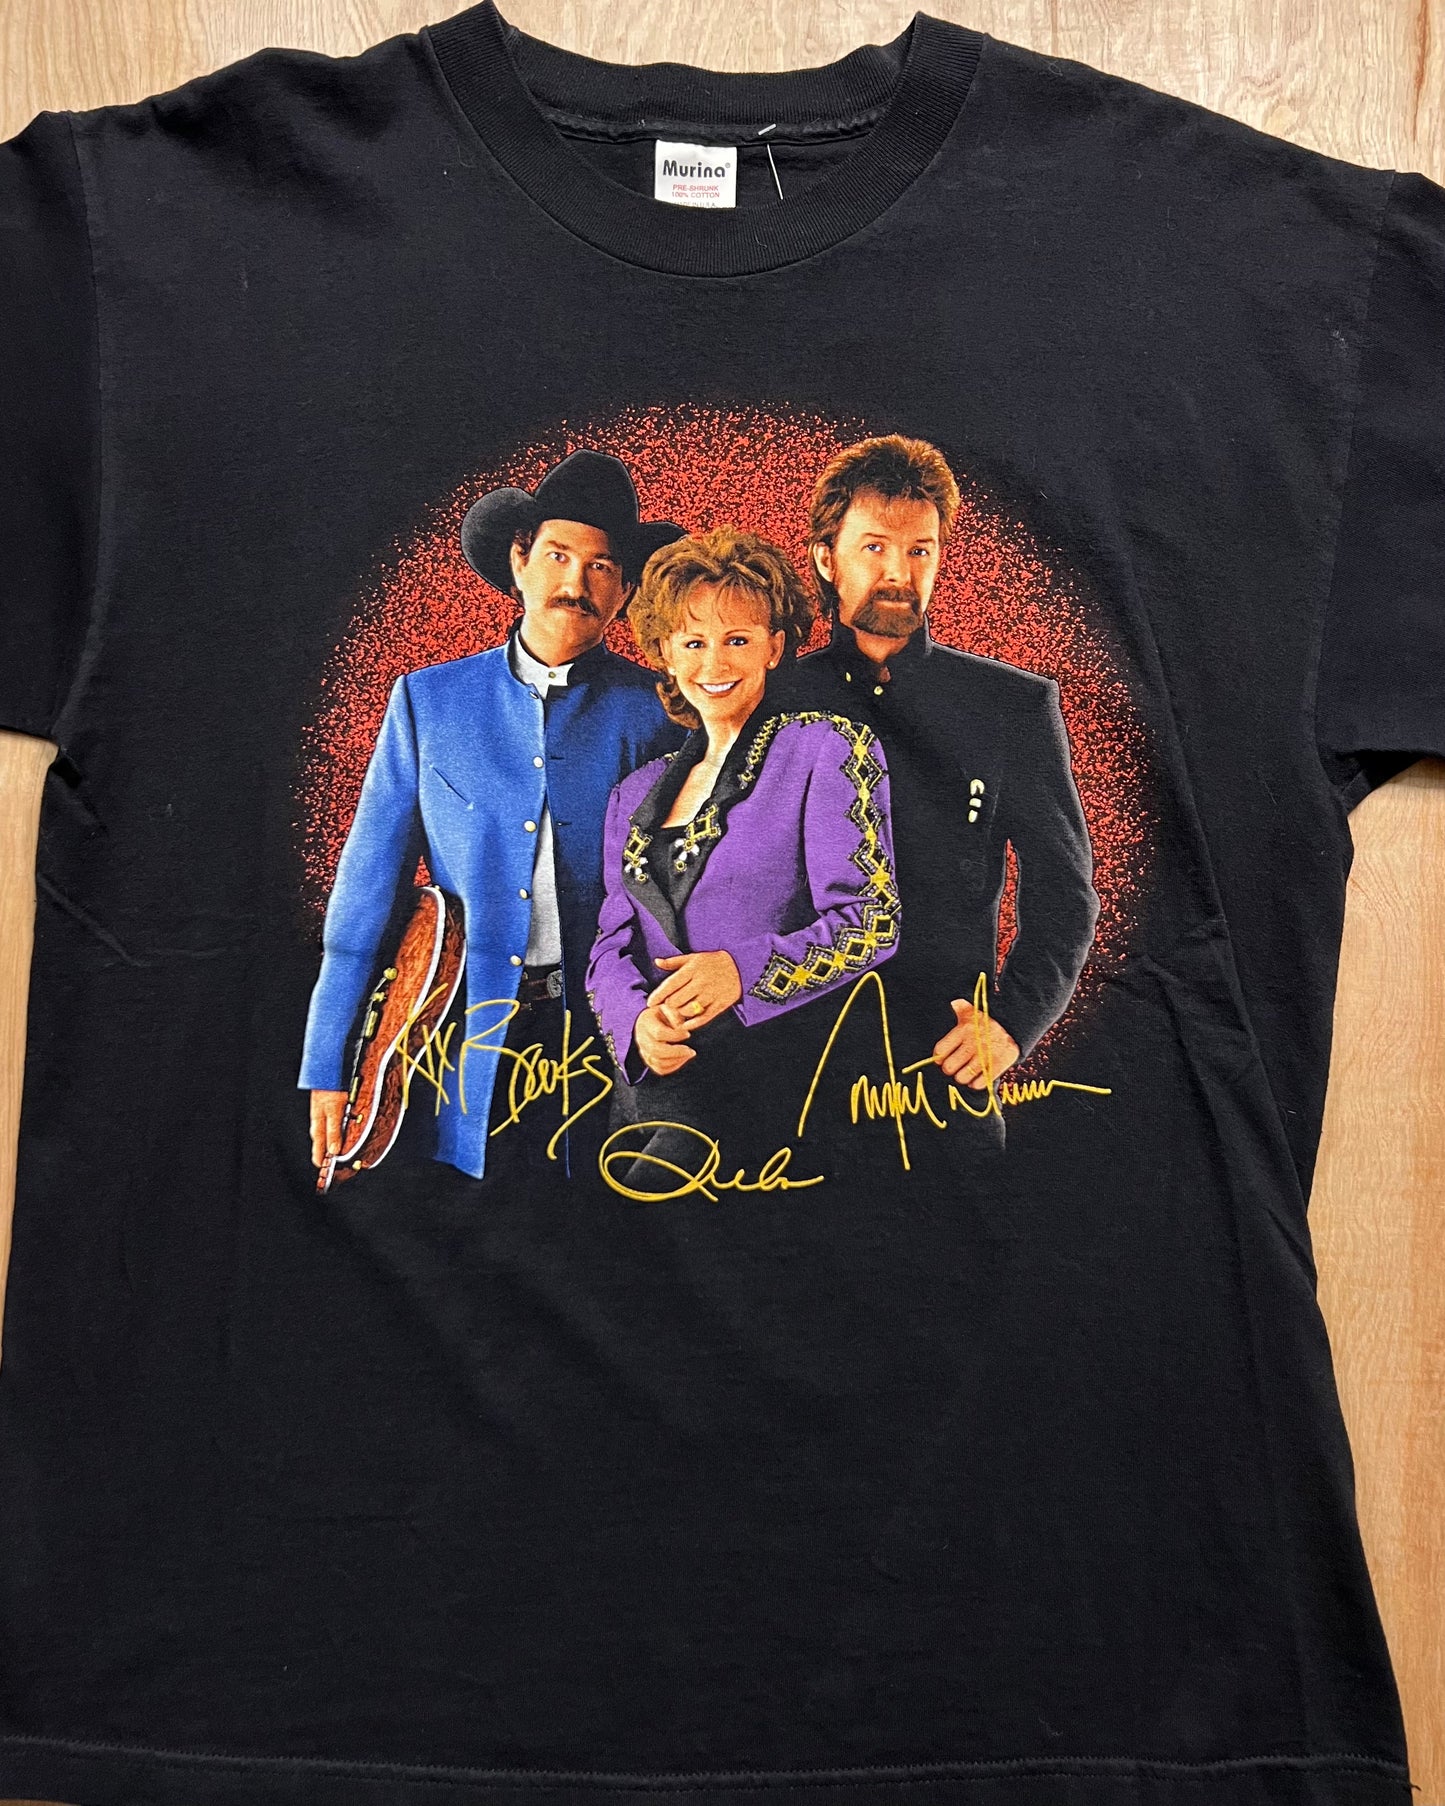 1997 Brooks & Dunn +Reba Single Stitch Tour T-Shirt